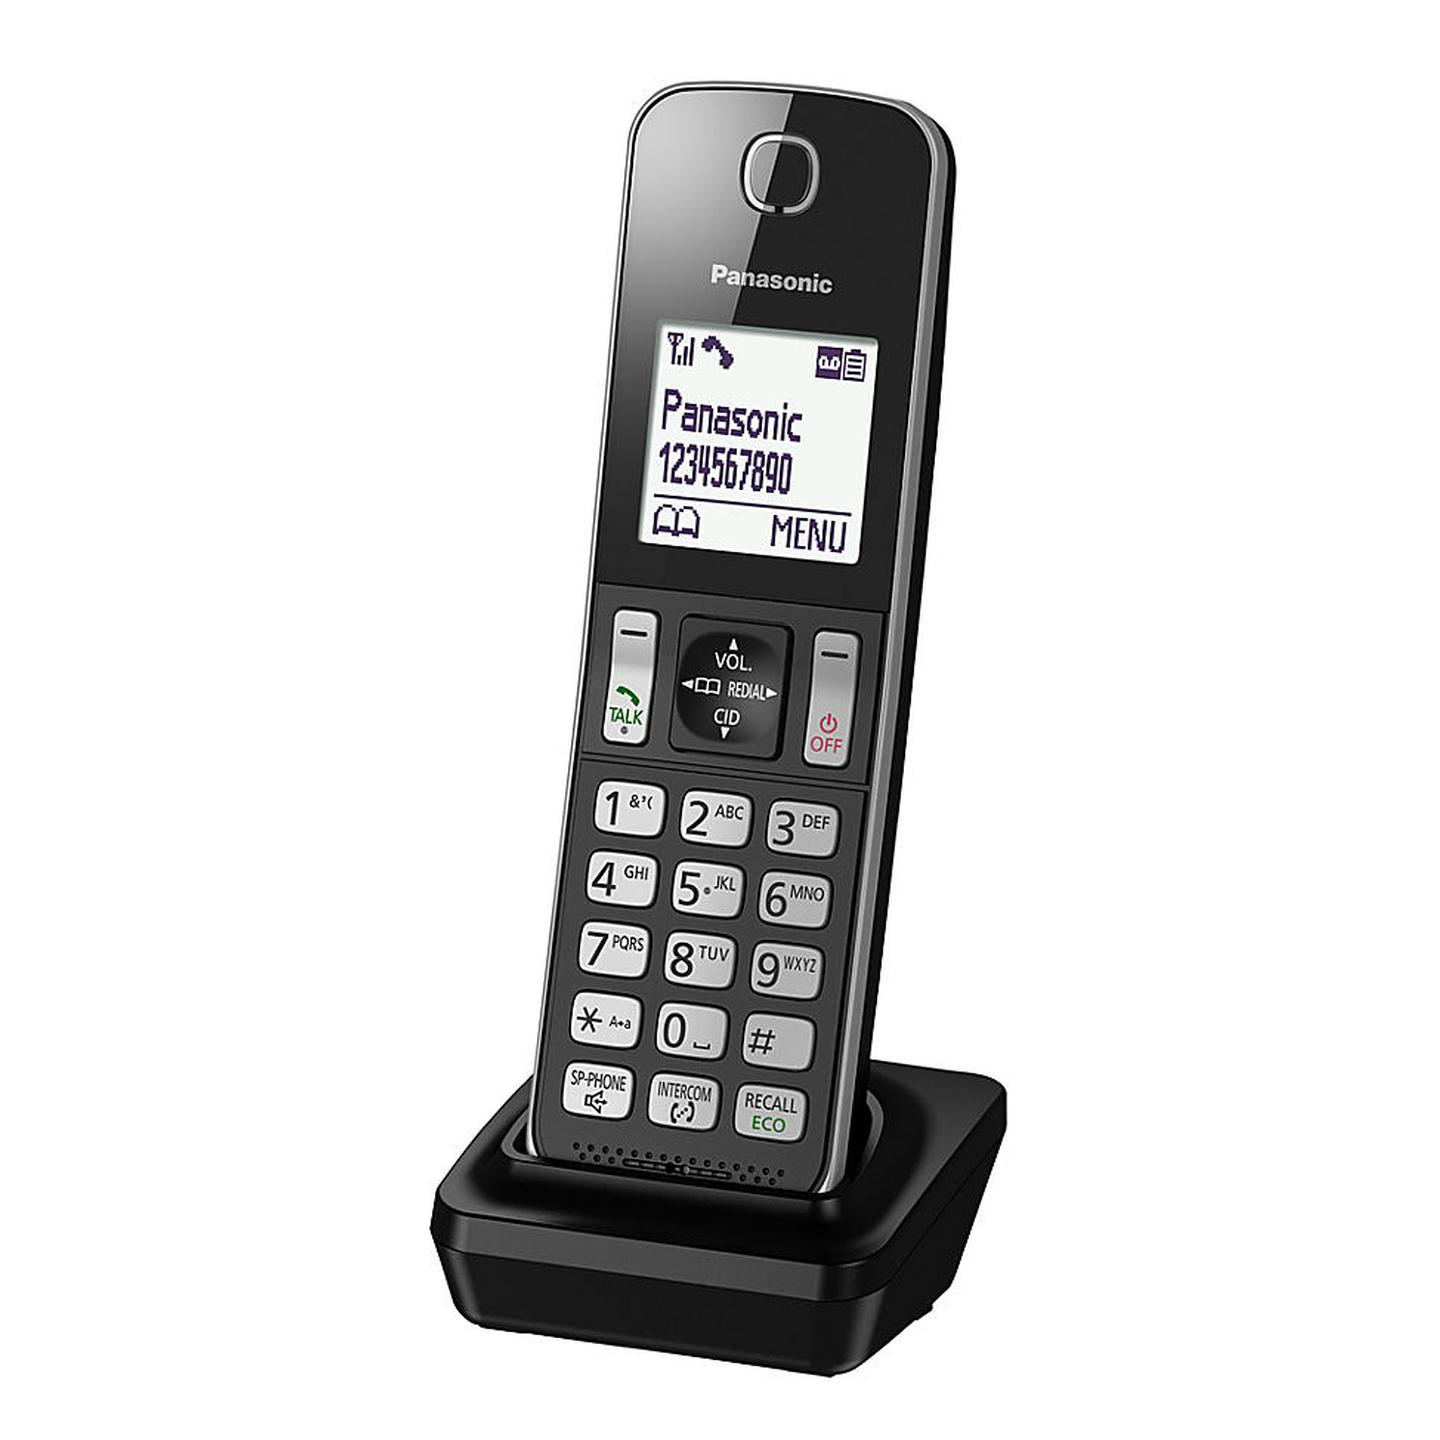 Panasonic KX-TGDA30AZB cordless telephone handset add-on packBR/Spare handset suitable for KX-TGF380AZM and KX-TGF382AZM